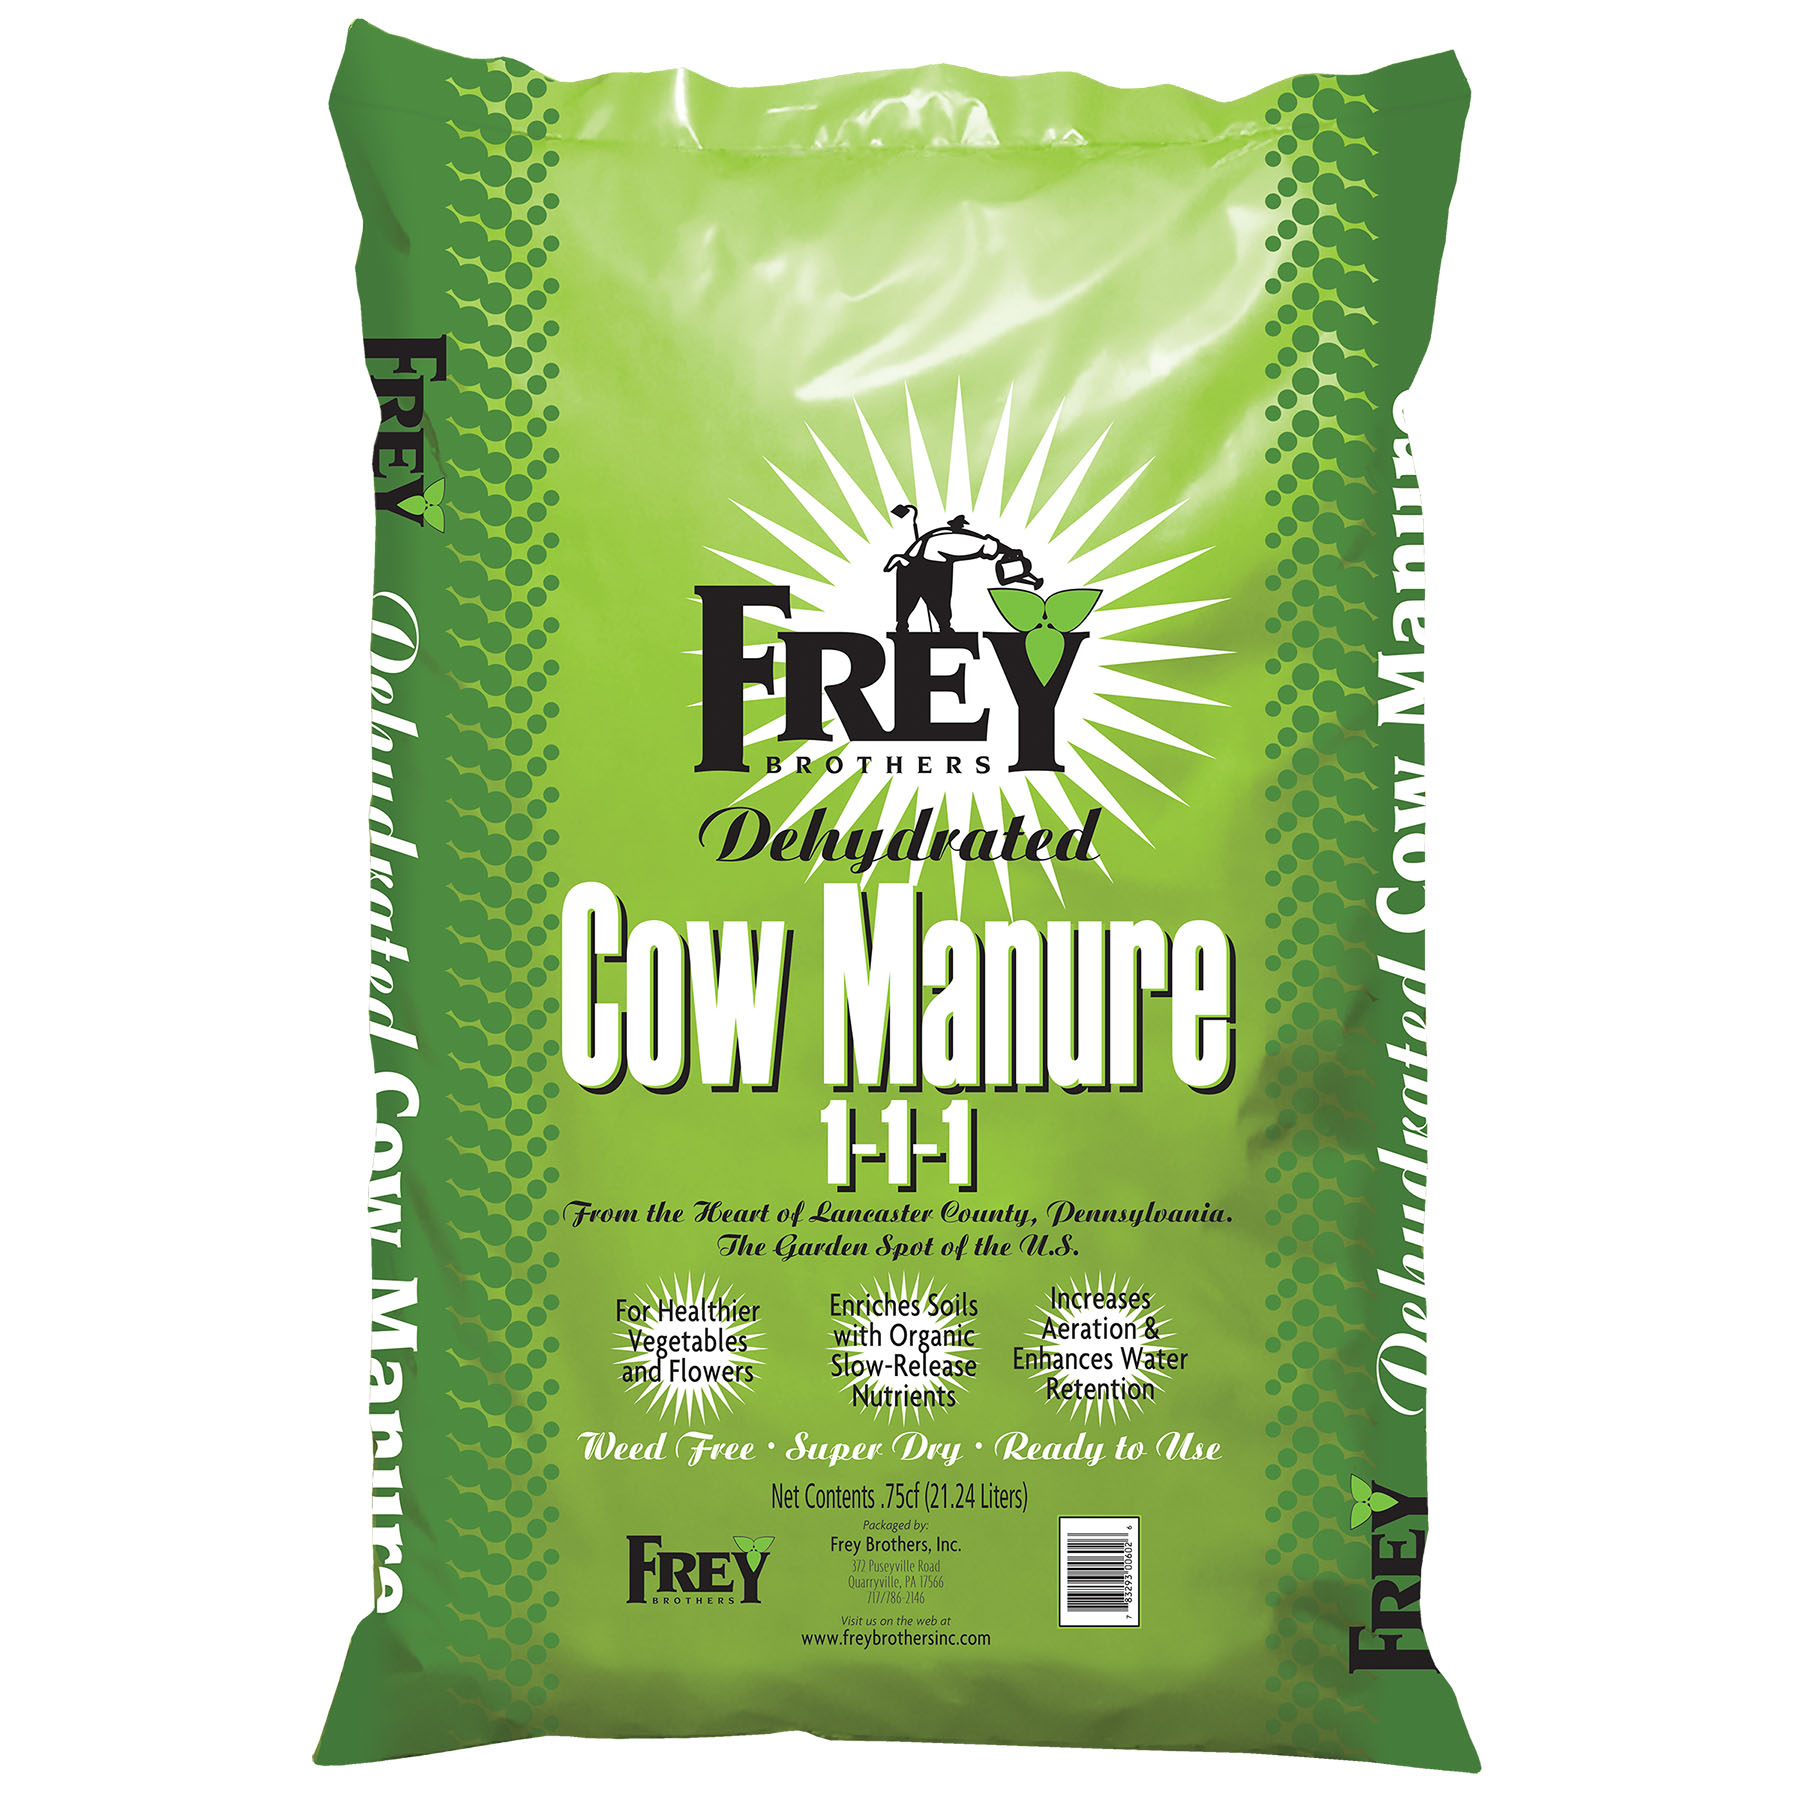 Frey Dehydrated Cow Manure 1-1-1 0.75 cu ft Bag - 75 per pallet - Amendments